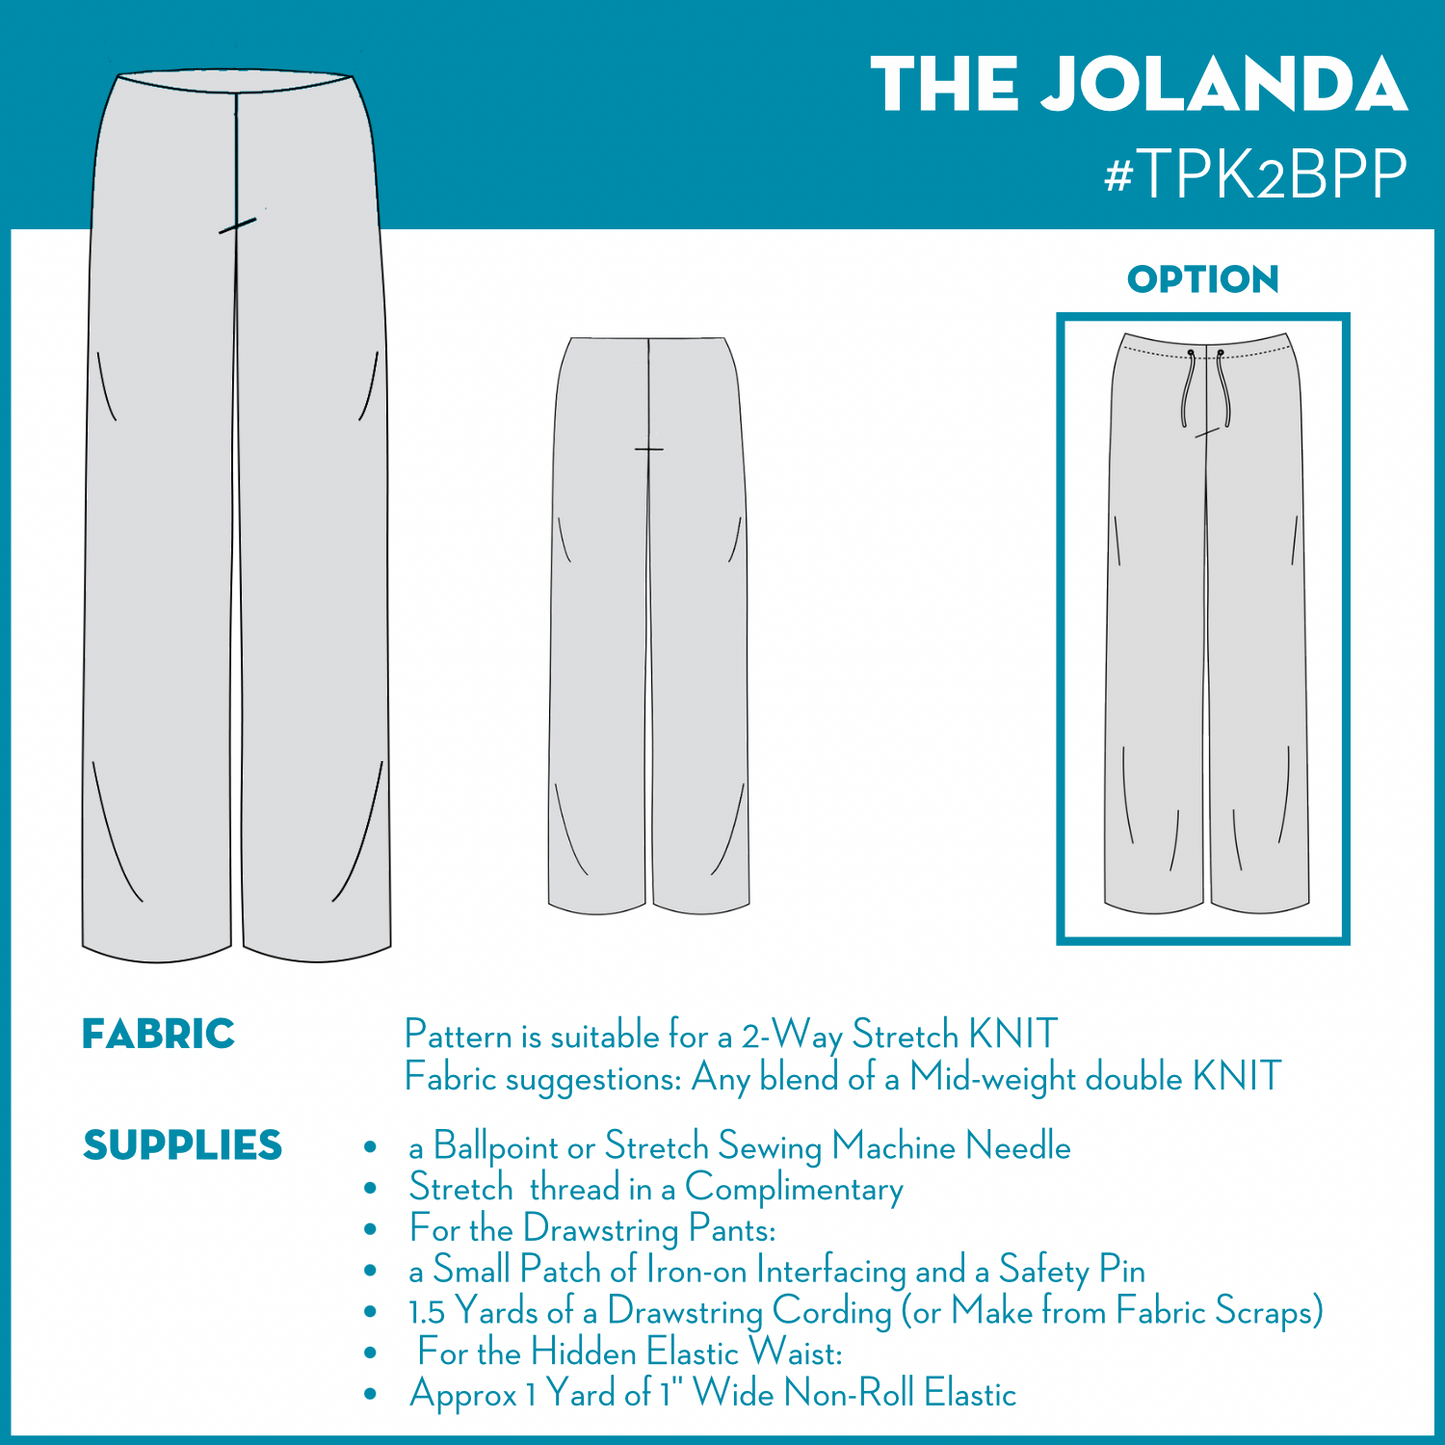 The Jolanda